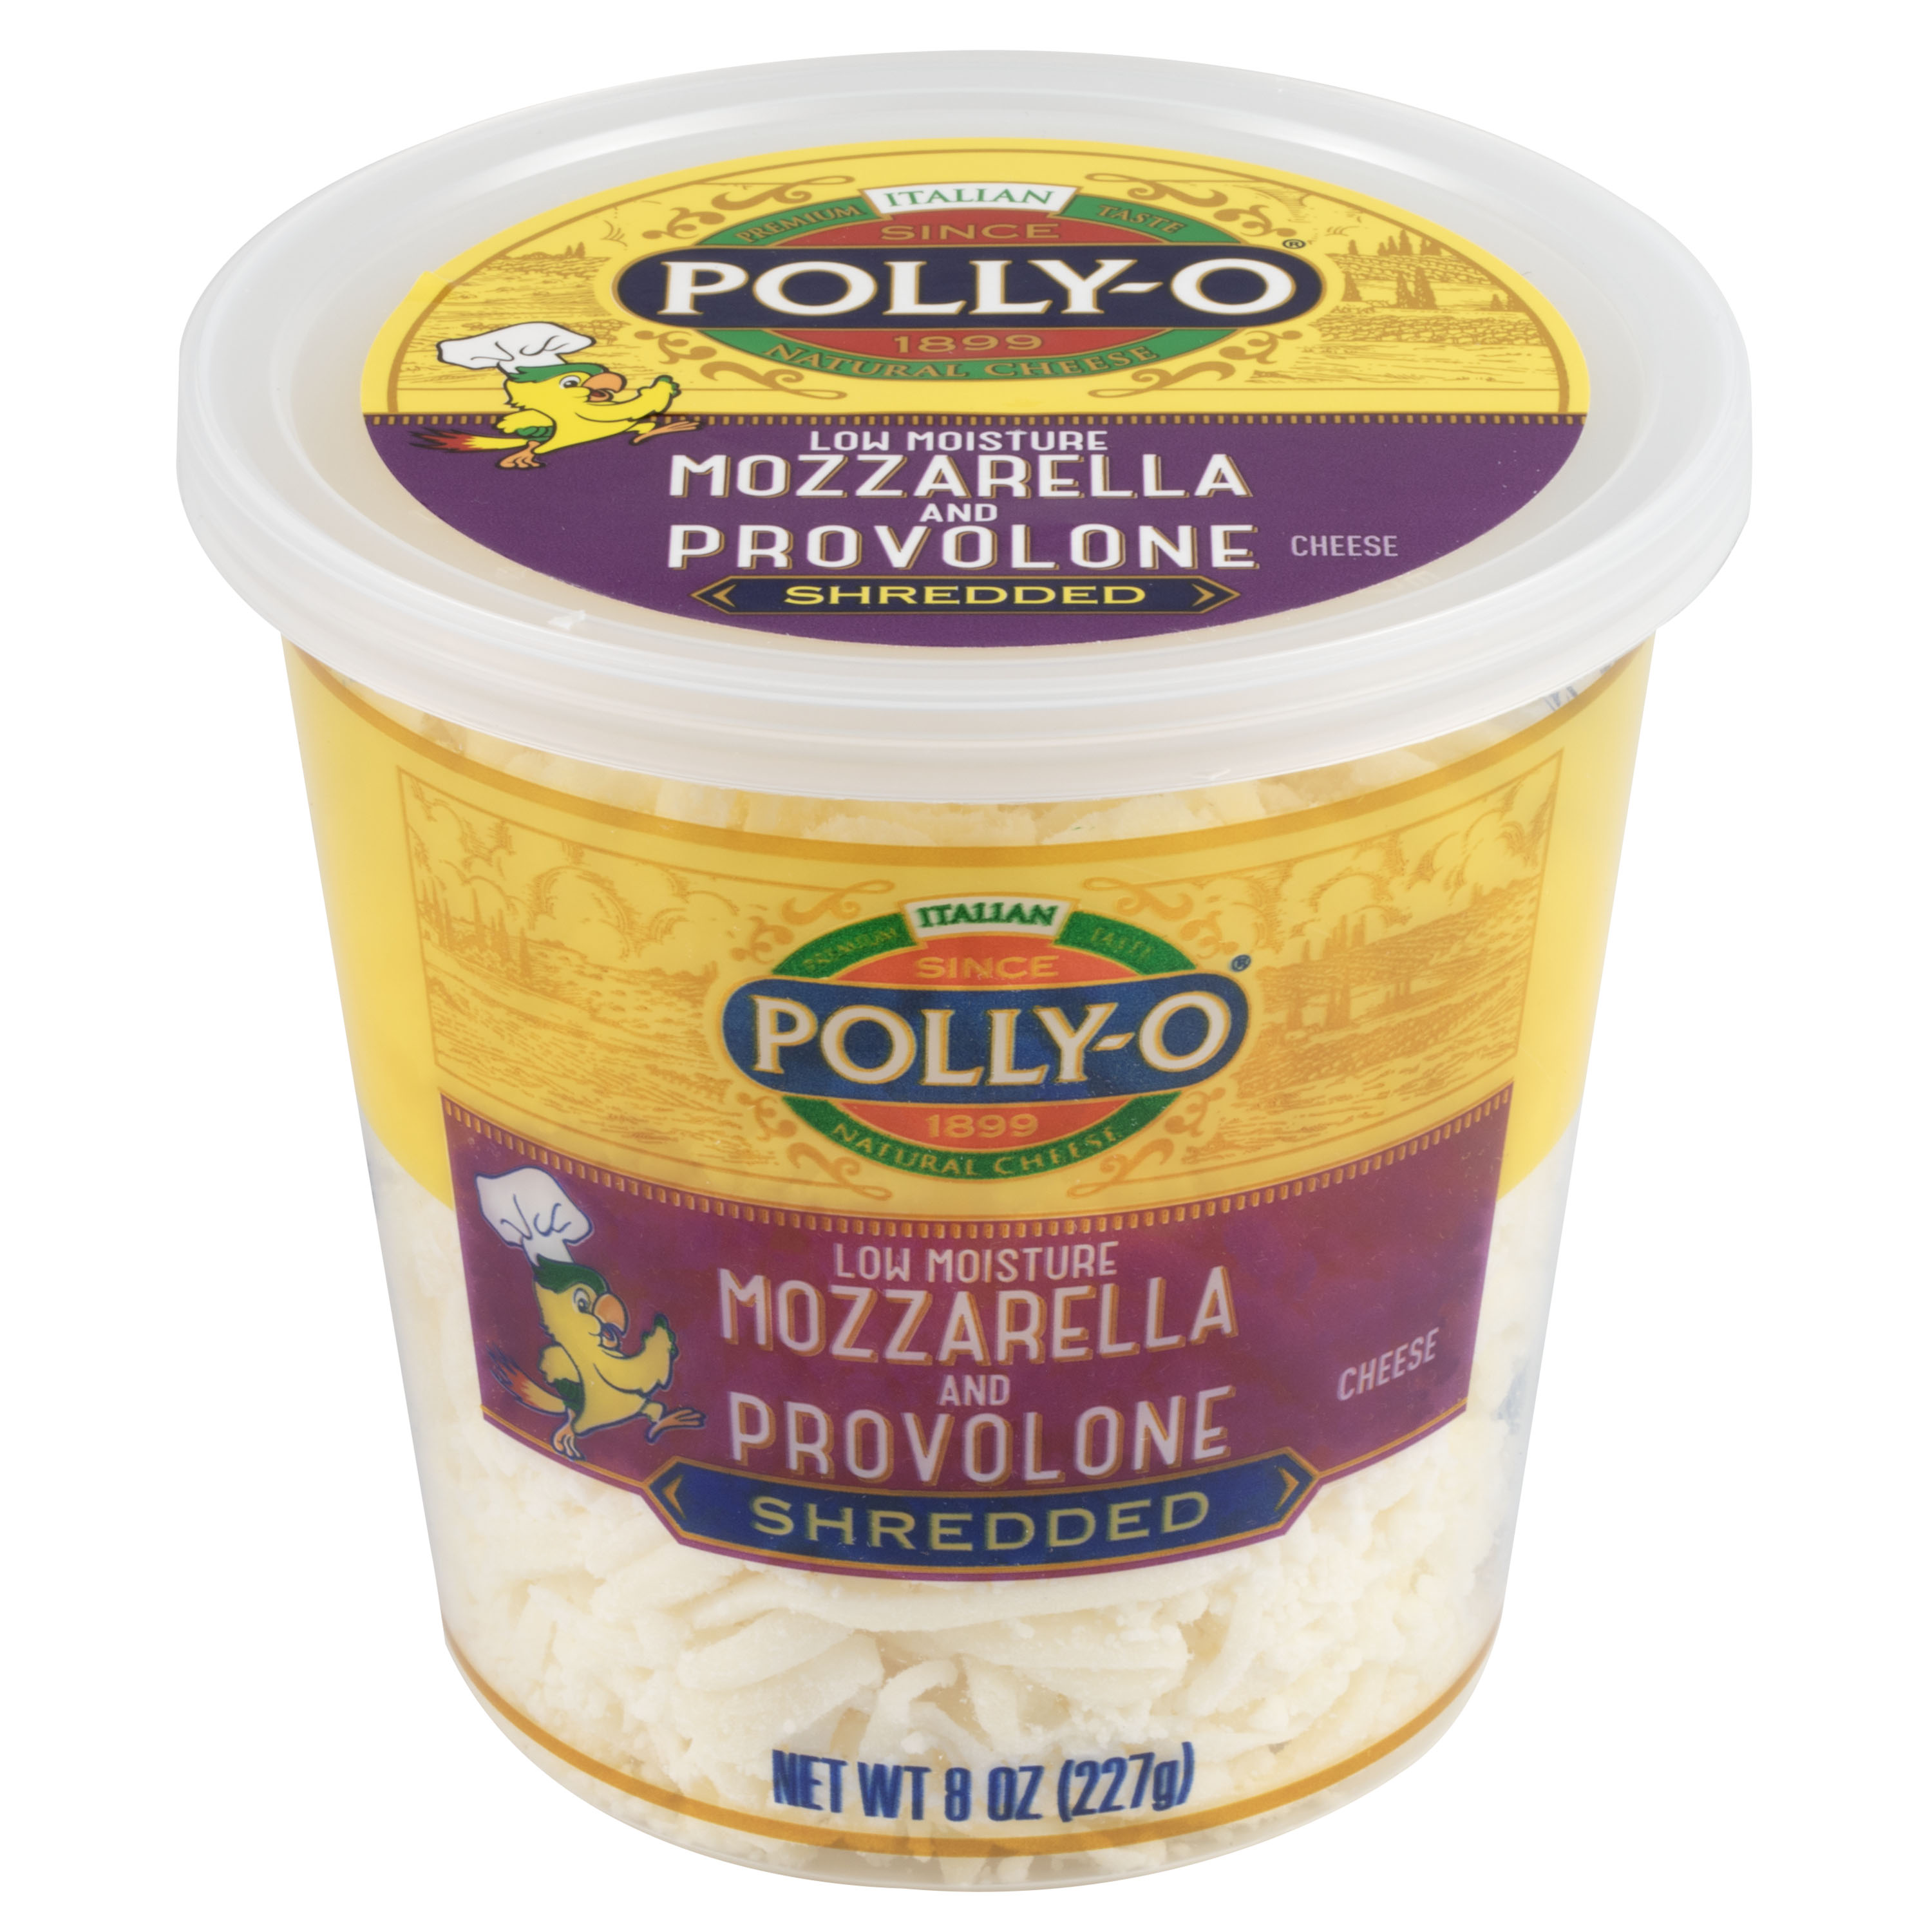 Low Moisture Mozzarella and Provolone Shredded, 8 oz. Cup